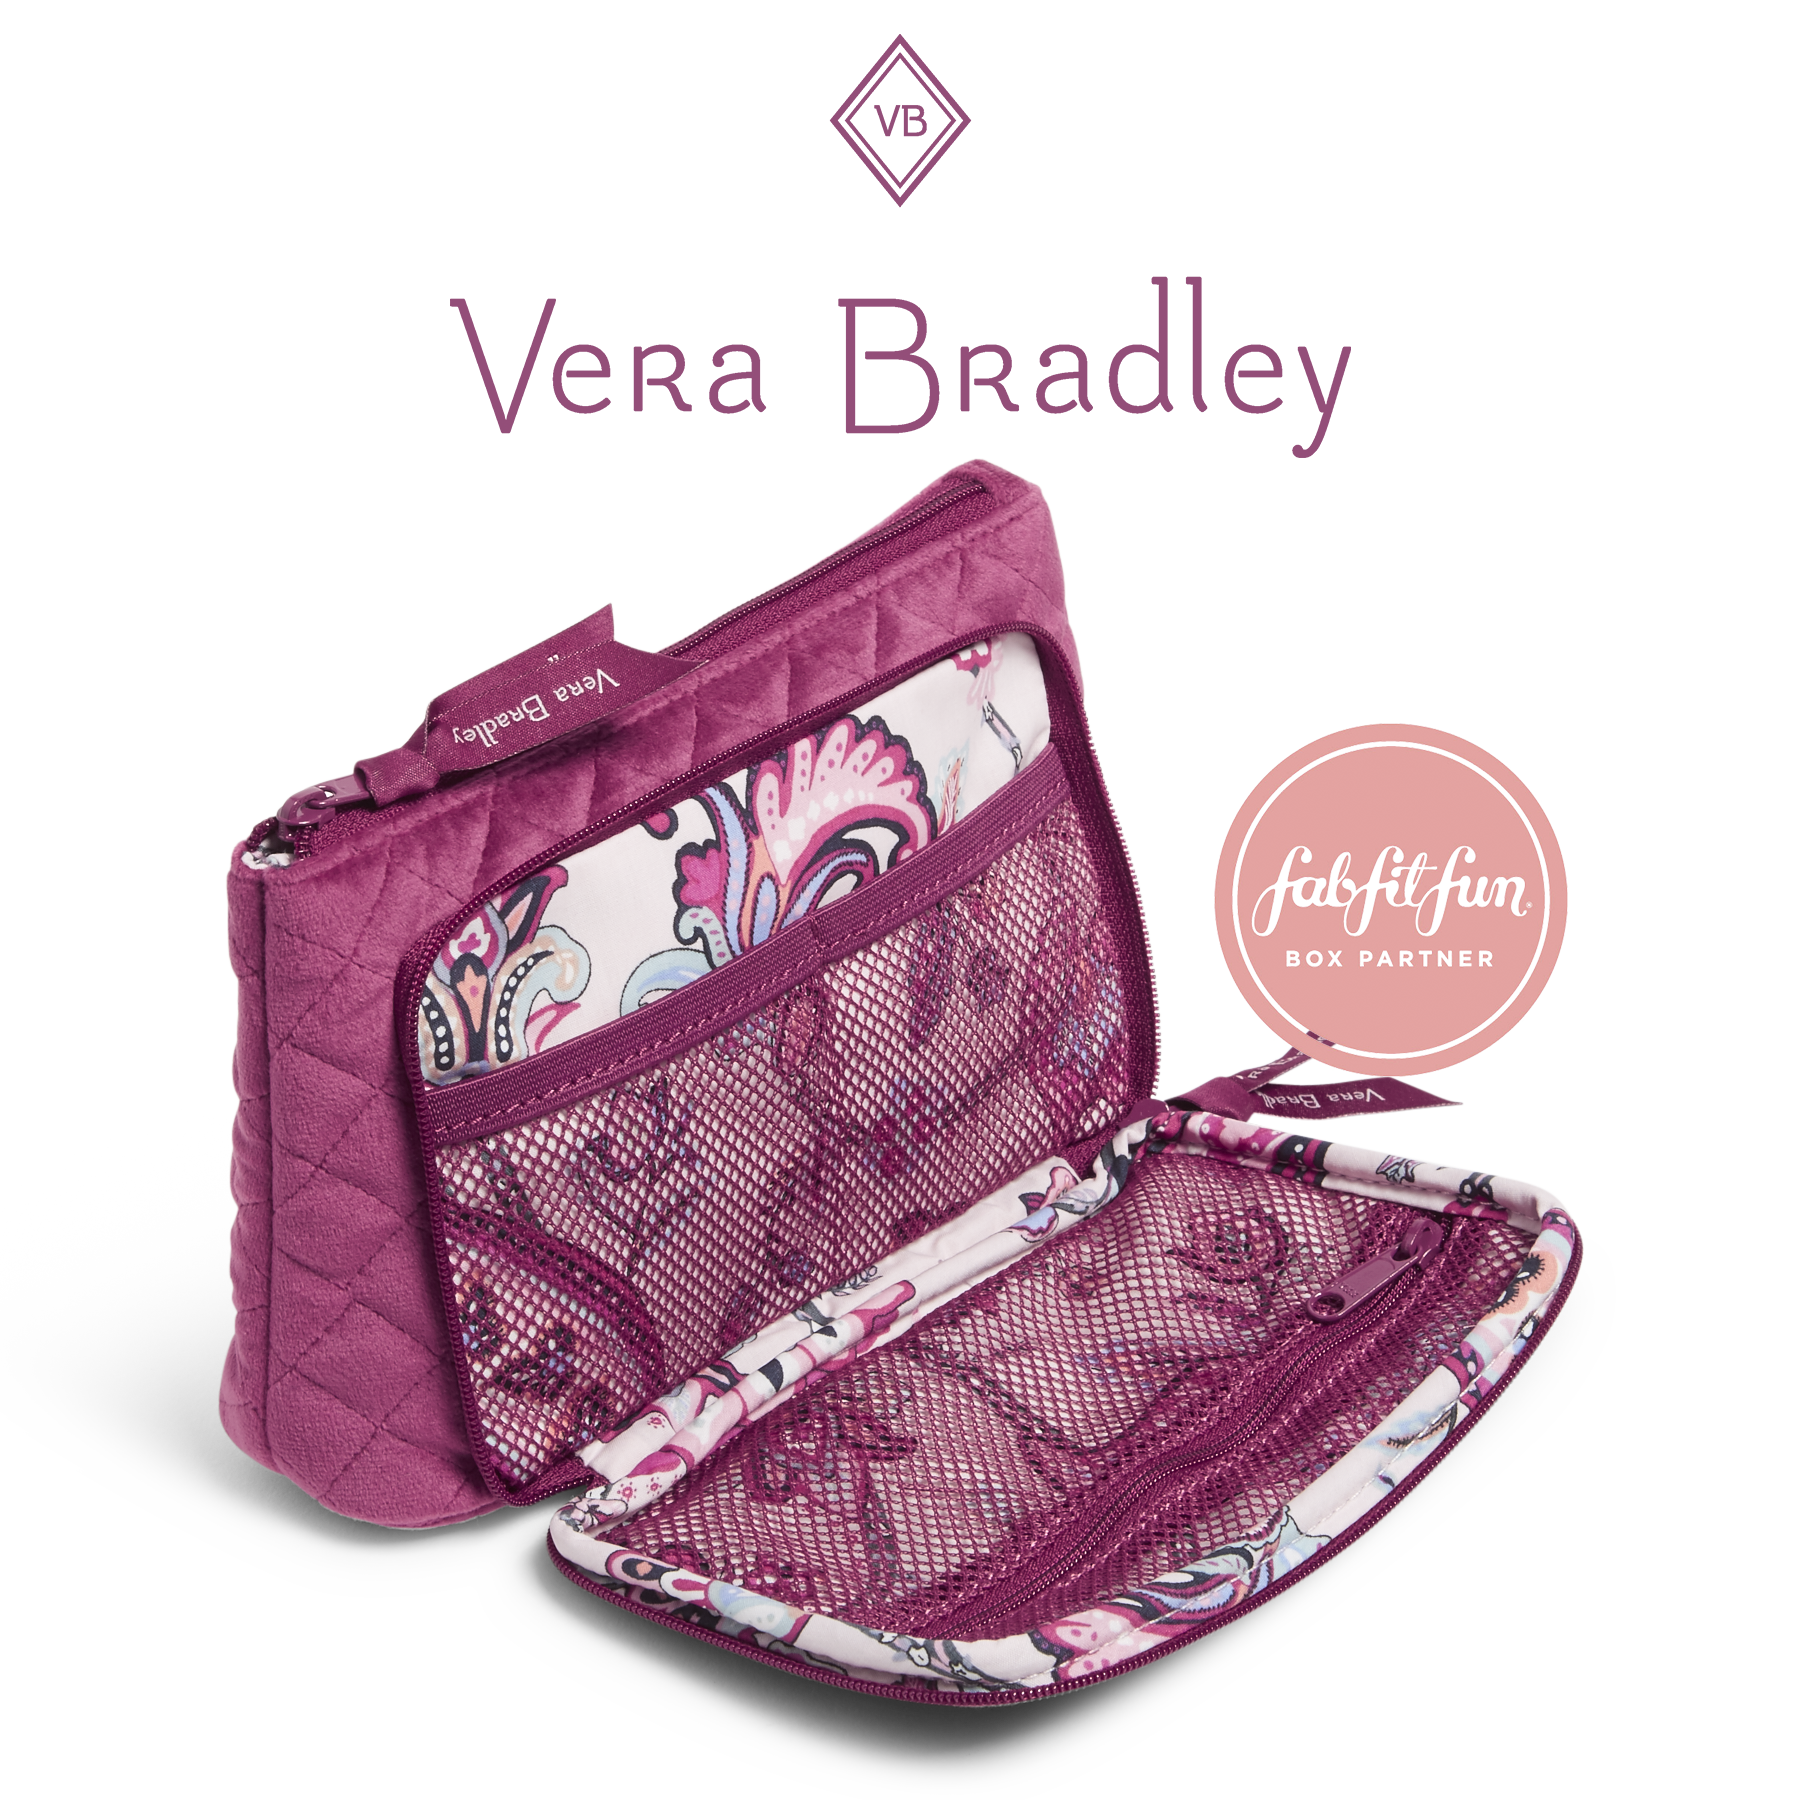 Vera Bradley Compact Organizer2